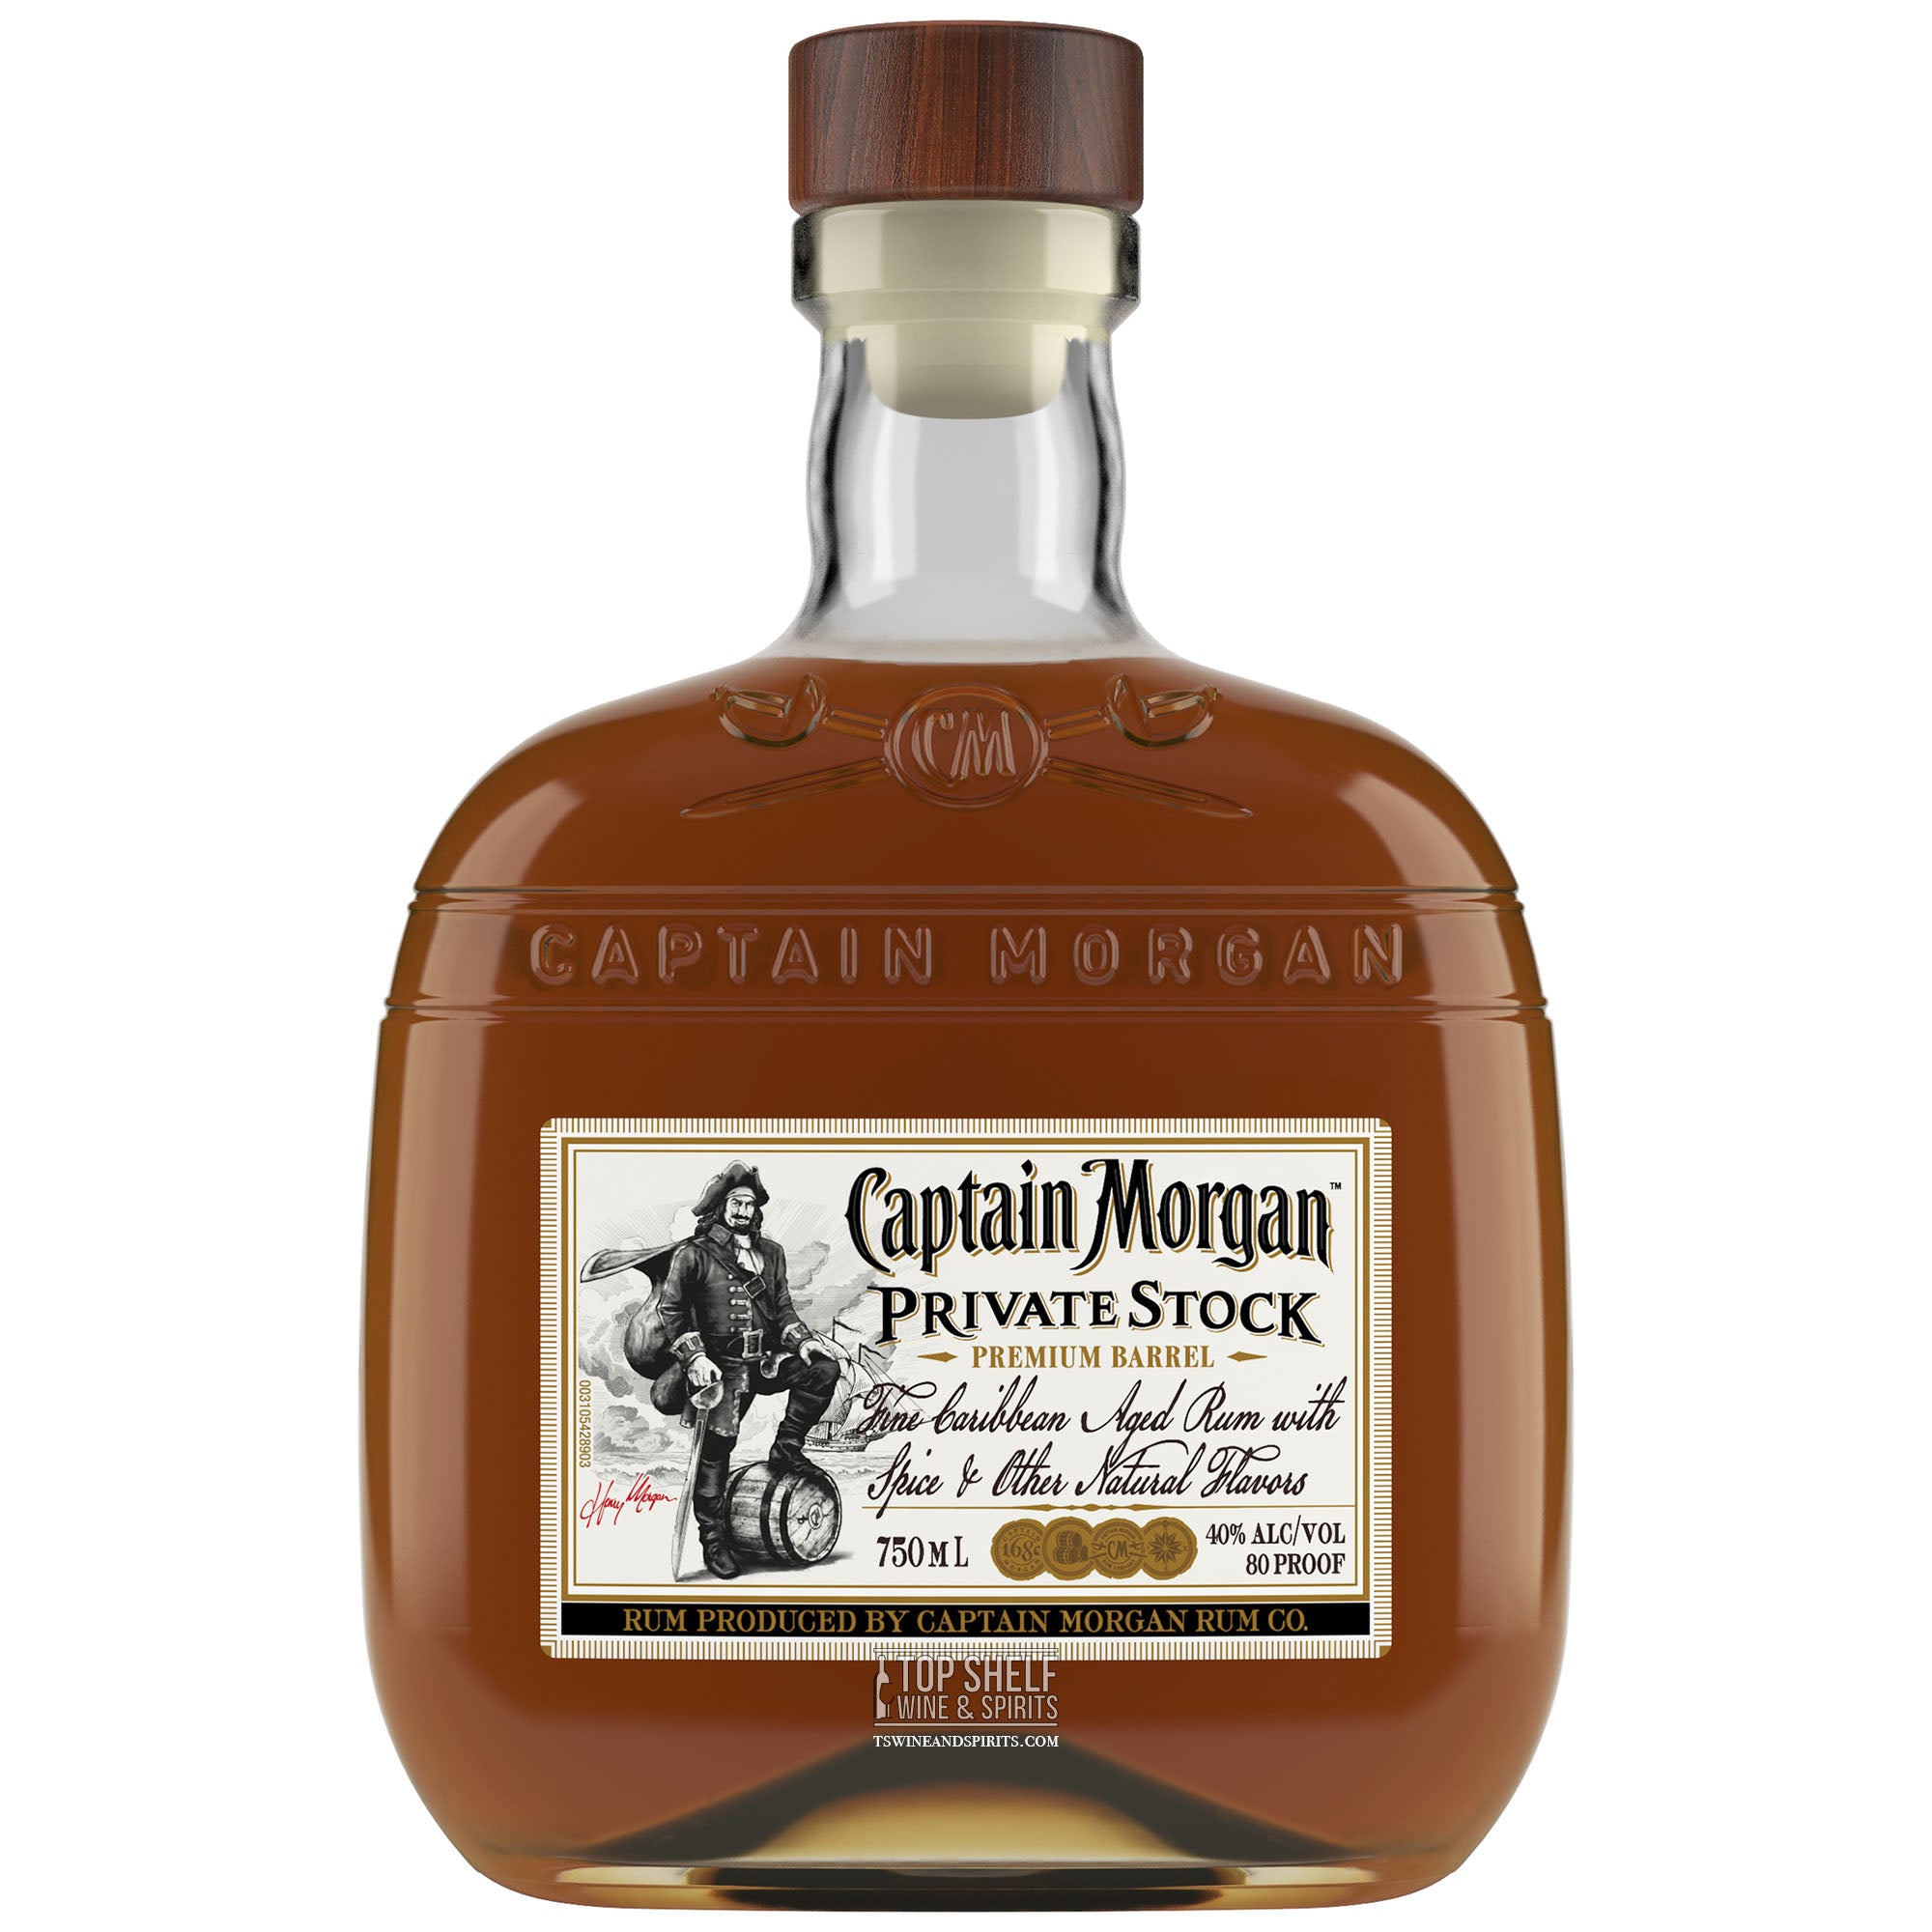 Captain Morgan Private Stock Premium Barrel